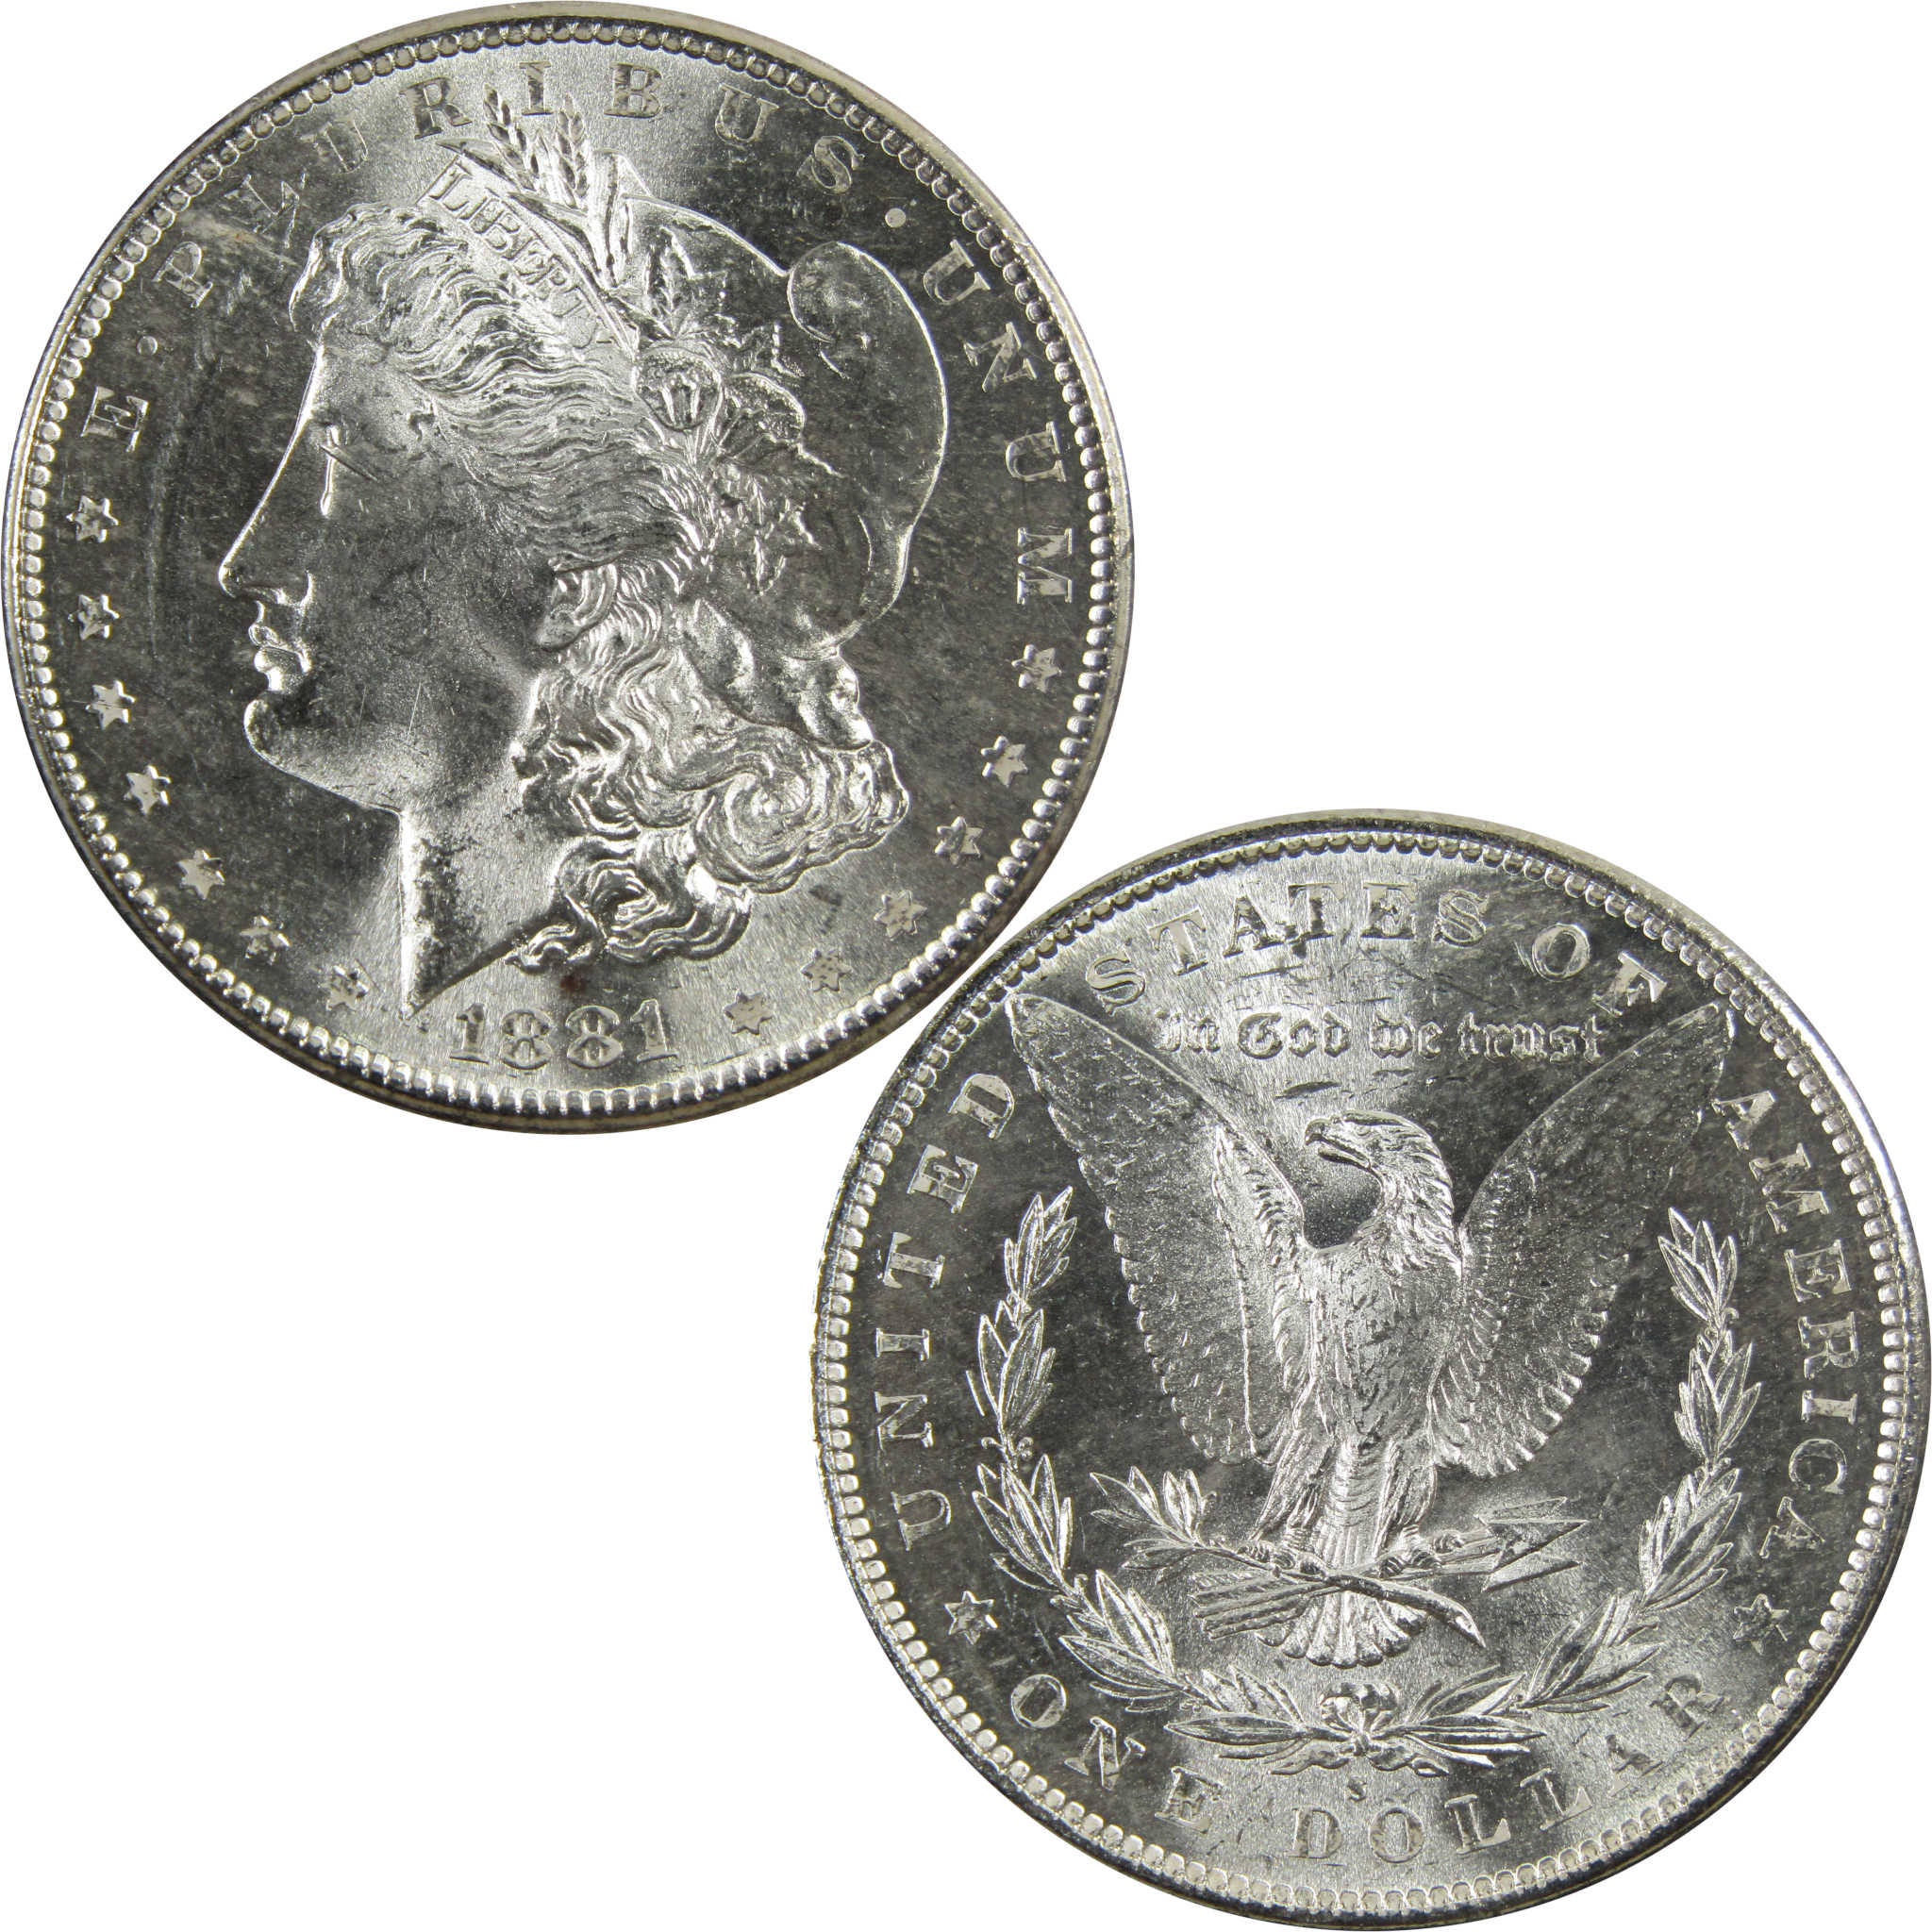 1881 S Morgan Dollar BU Uncirculated 90% Silver $1 Coin SKU:I5298 - Morgan coin - Morgan silver dollar - Morgan silver dollar for sale - Profile Coins &amp; Collectibles